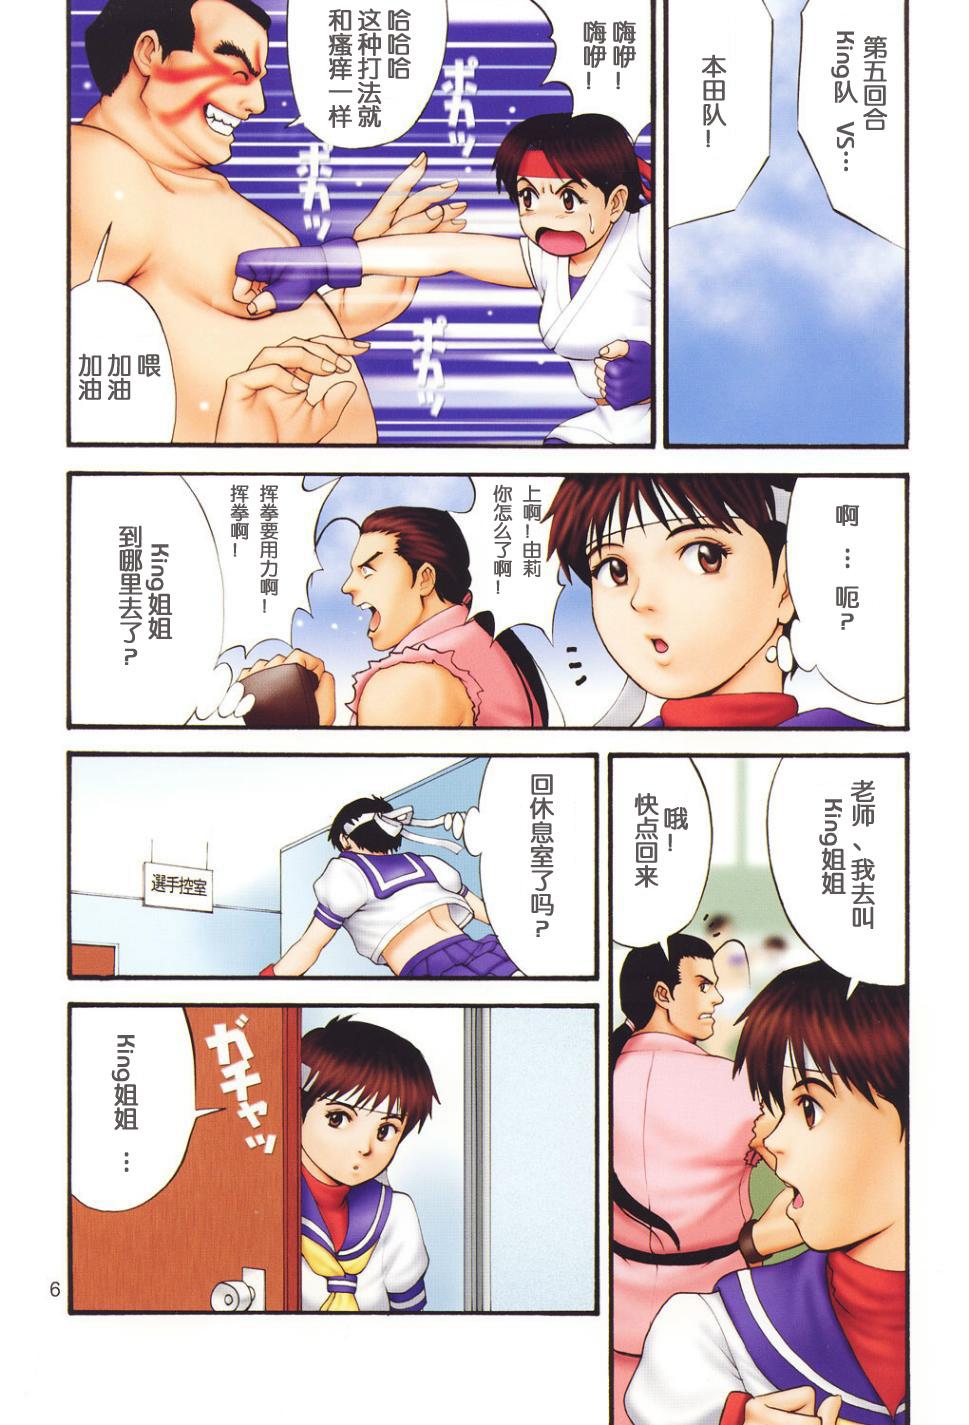 Couple The Yuri & Friends Fullcolor 4 SAKURA vs. YURI EDITION - Street fighter King of fighters All - Page 5